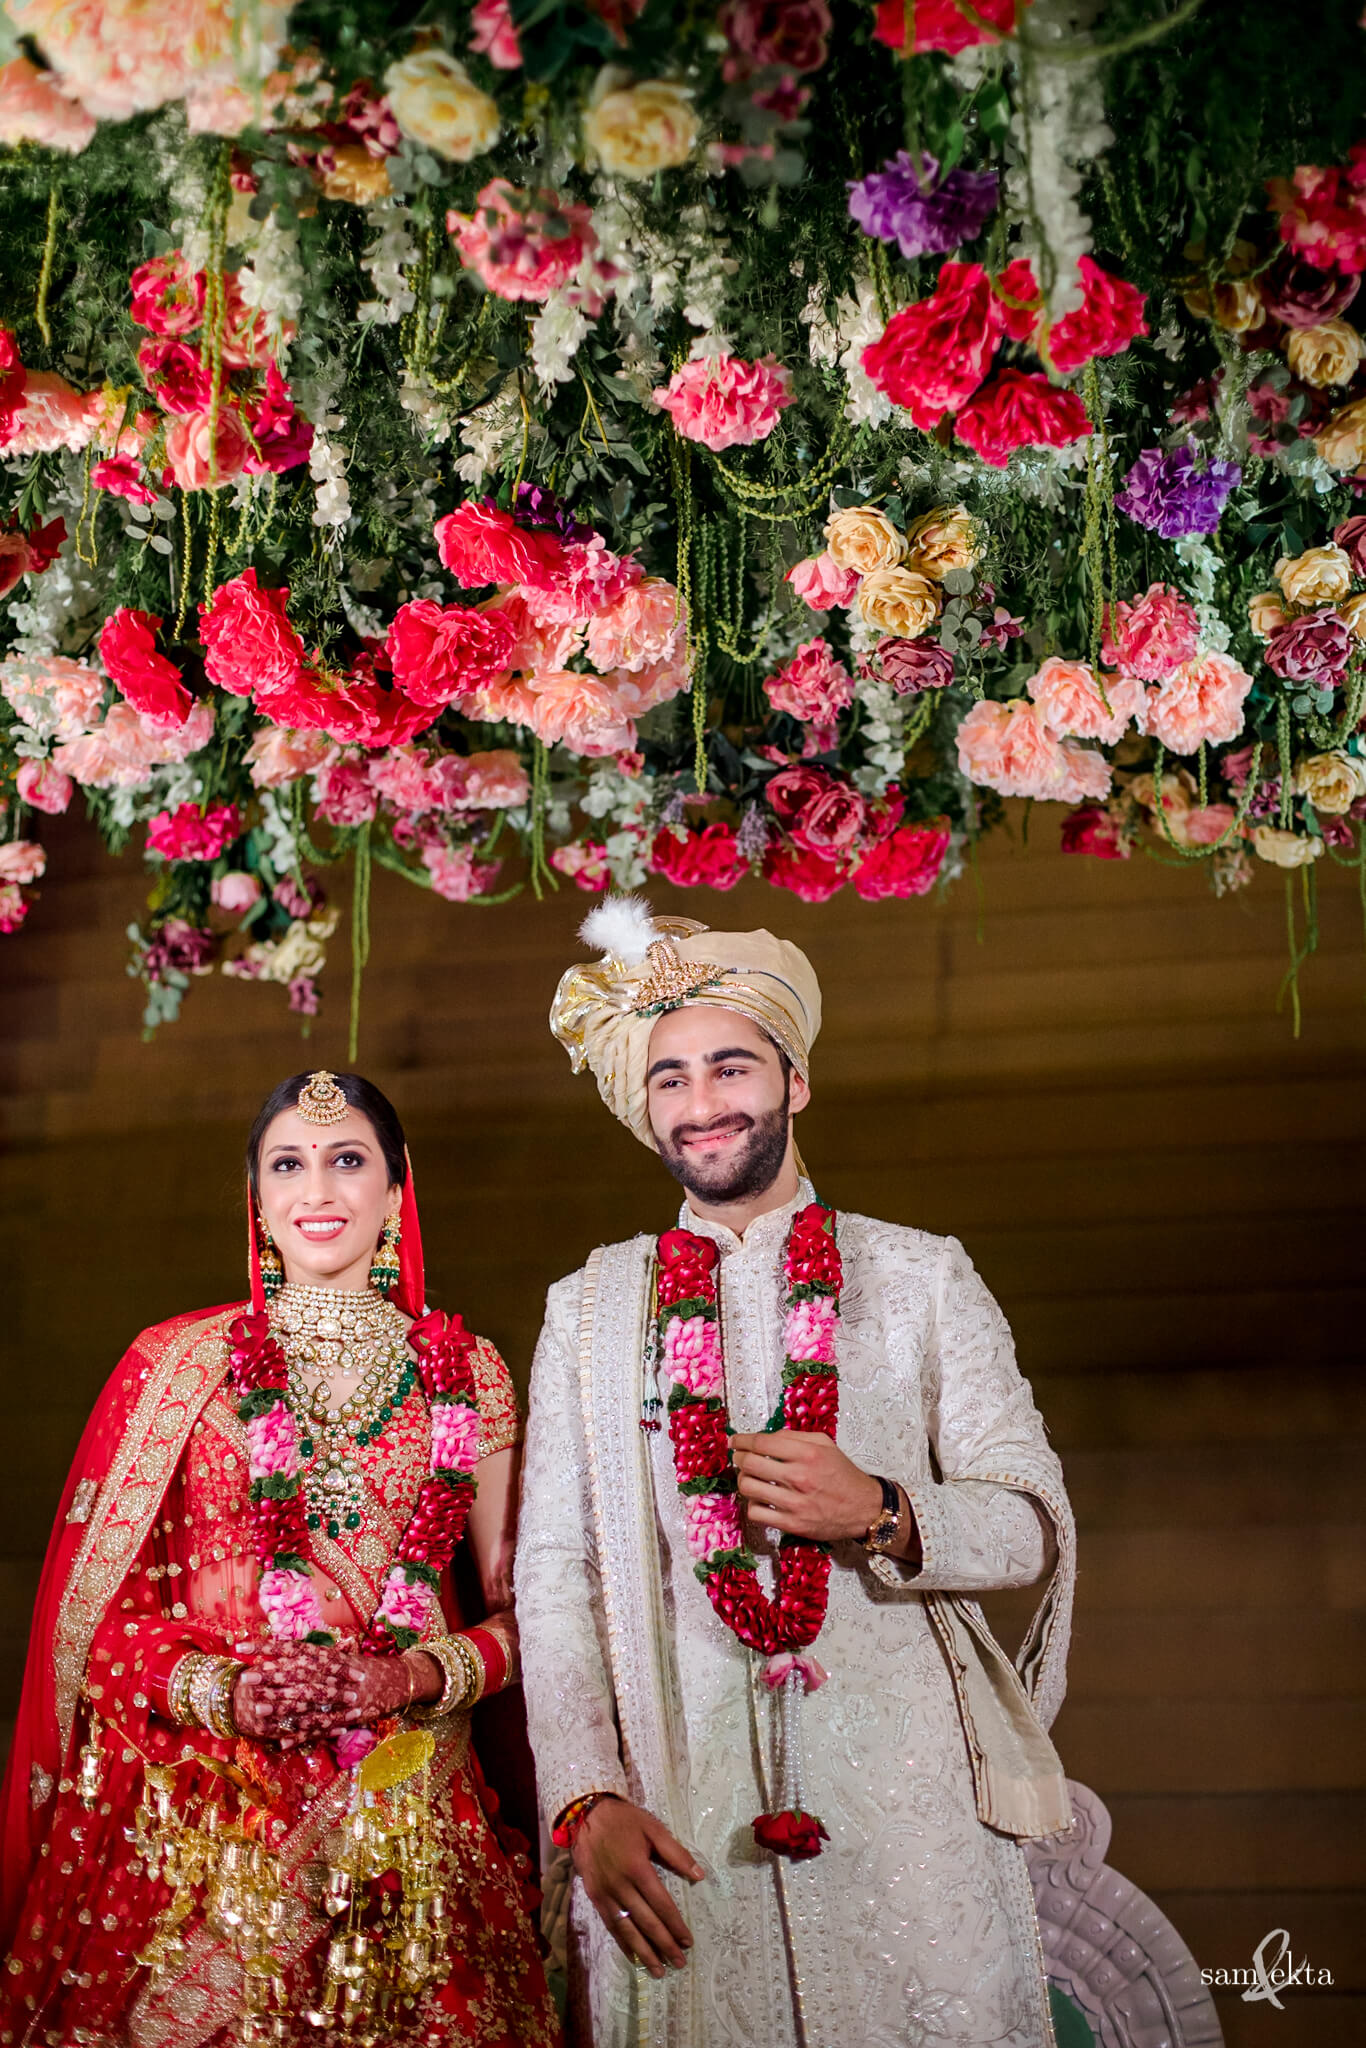 wedding decor, Armaan Jain And Anissa Malhotra’s Wedding